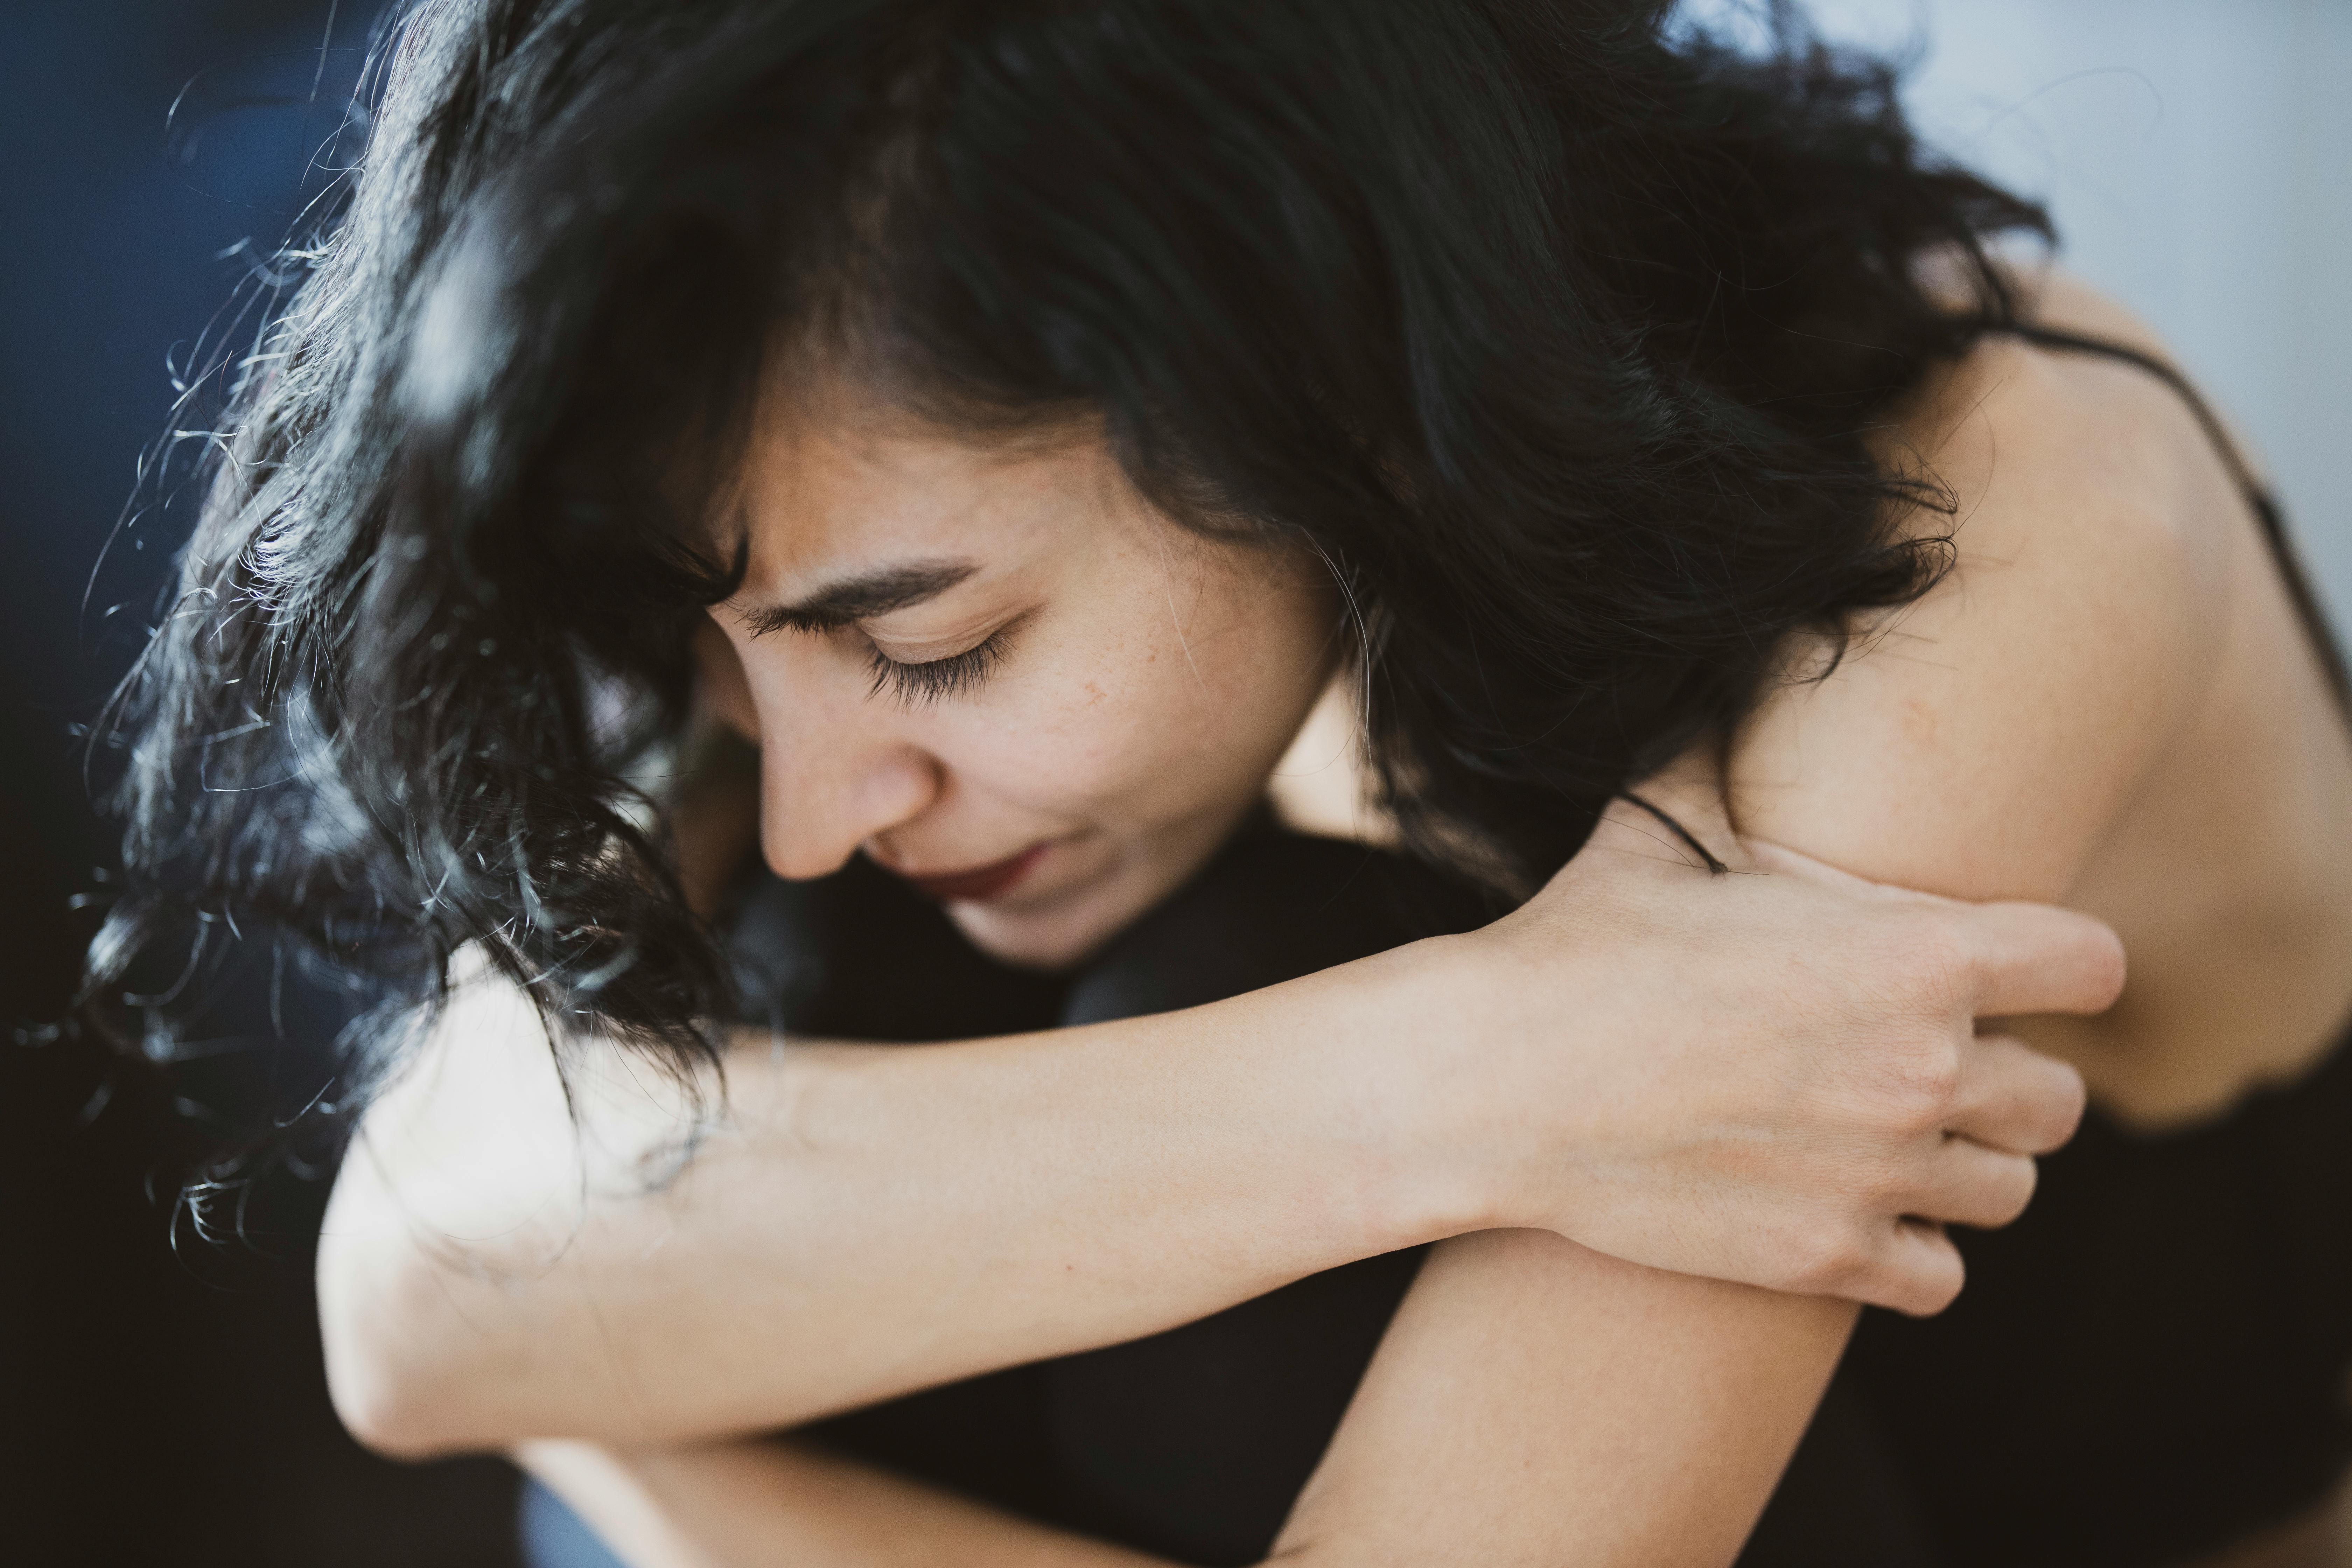 A depressed woman hugging herself | Source: Pexels